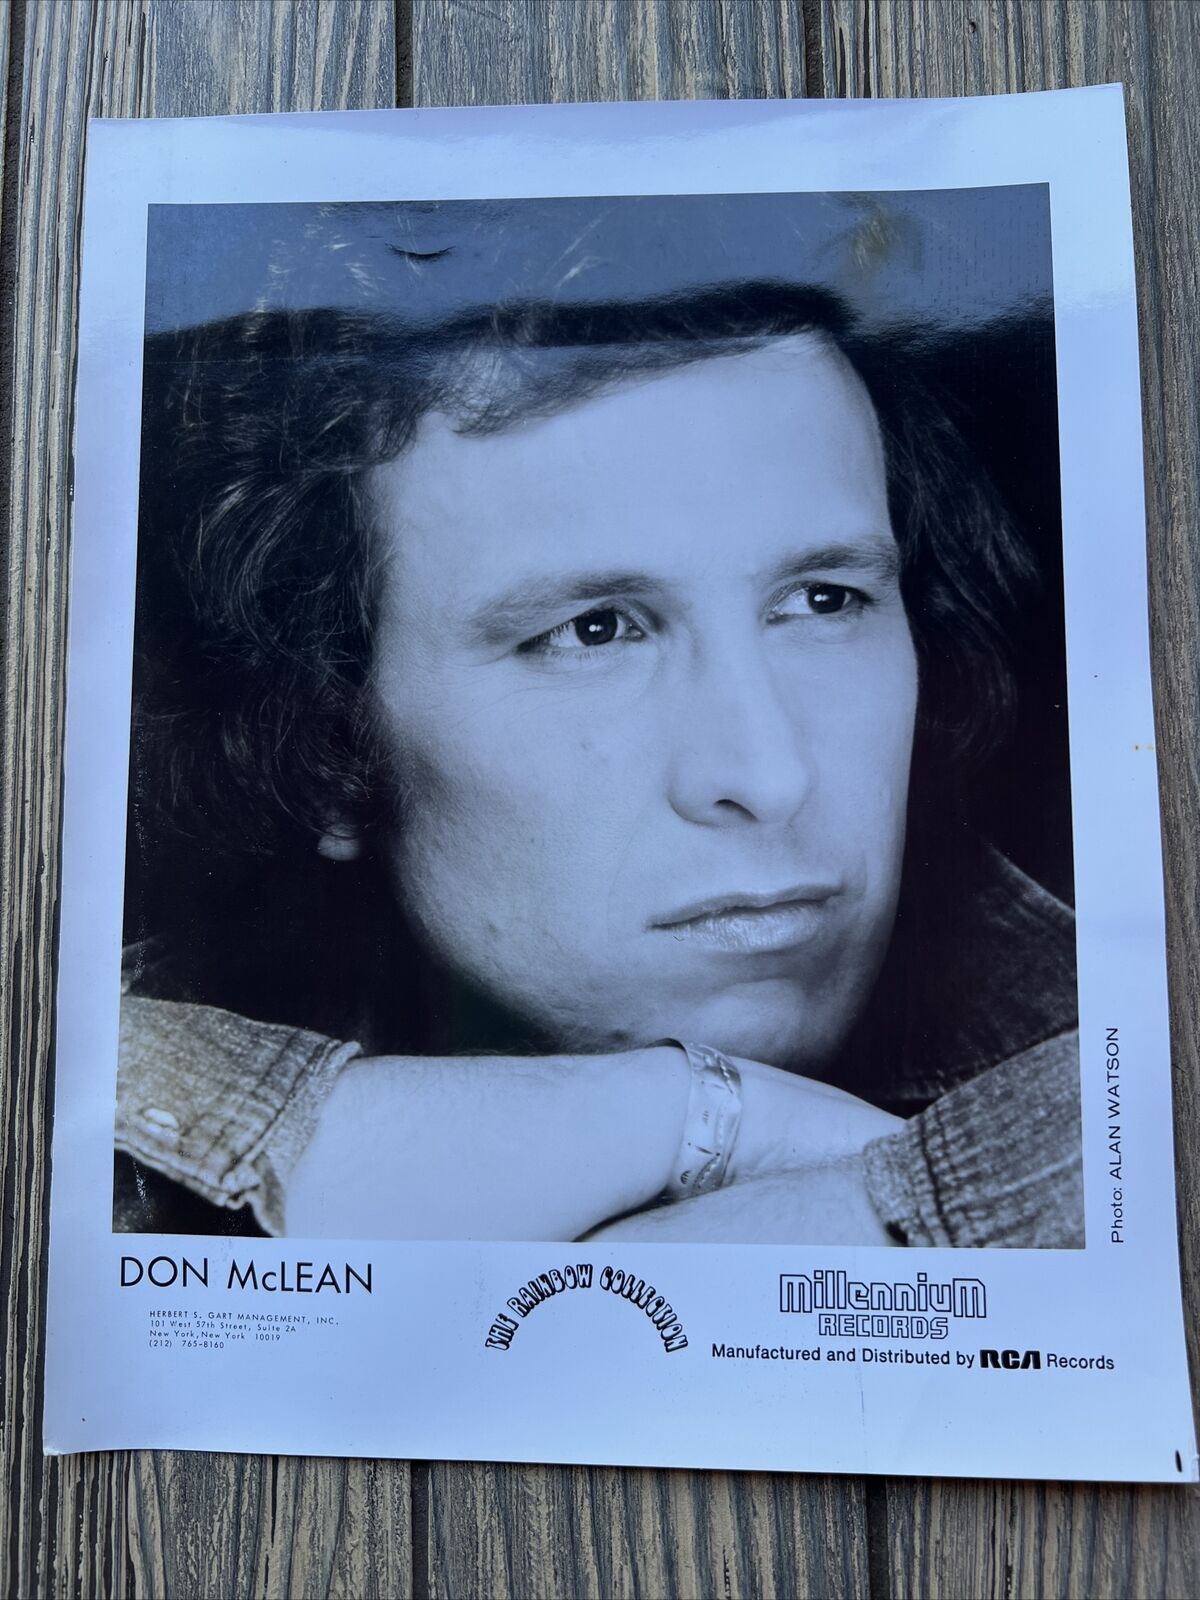 1981 Press Photo Musician Don Mclean Millennium Records Singer Songwriter 8X10